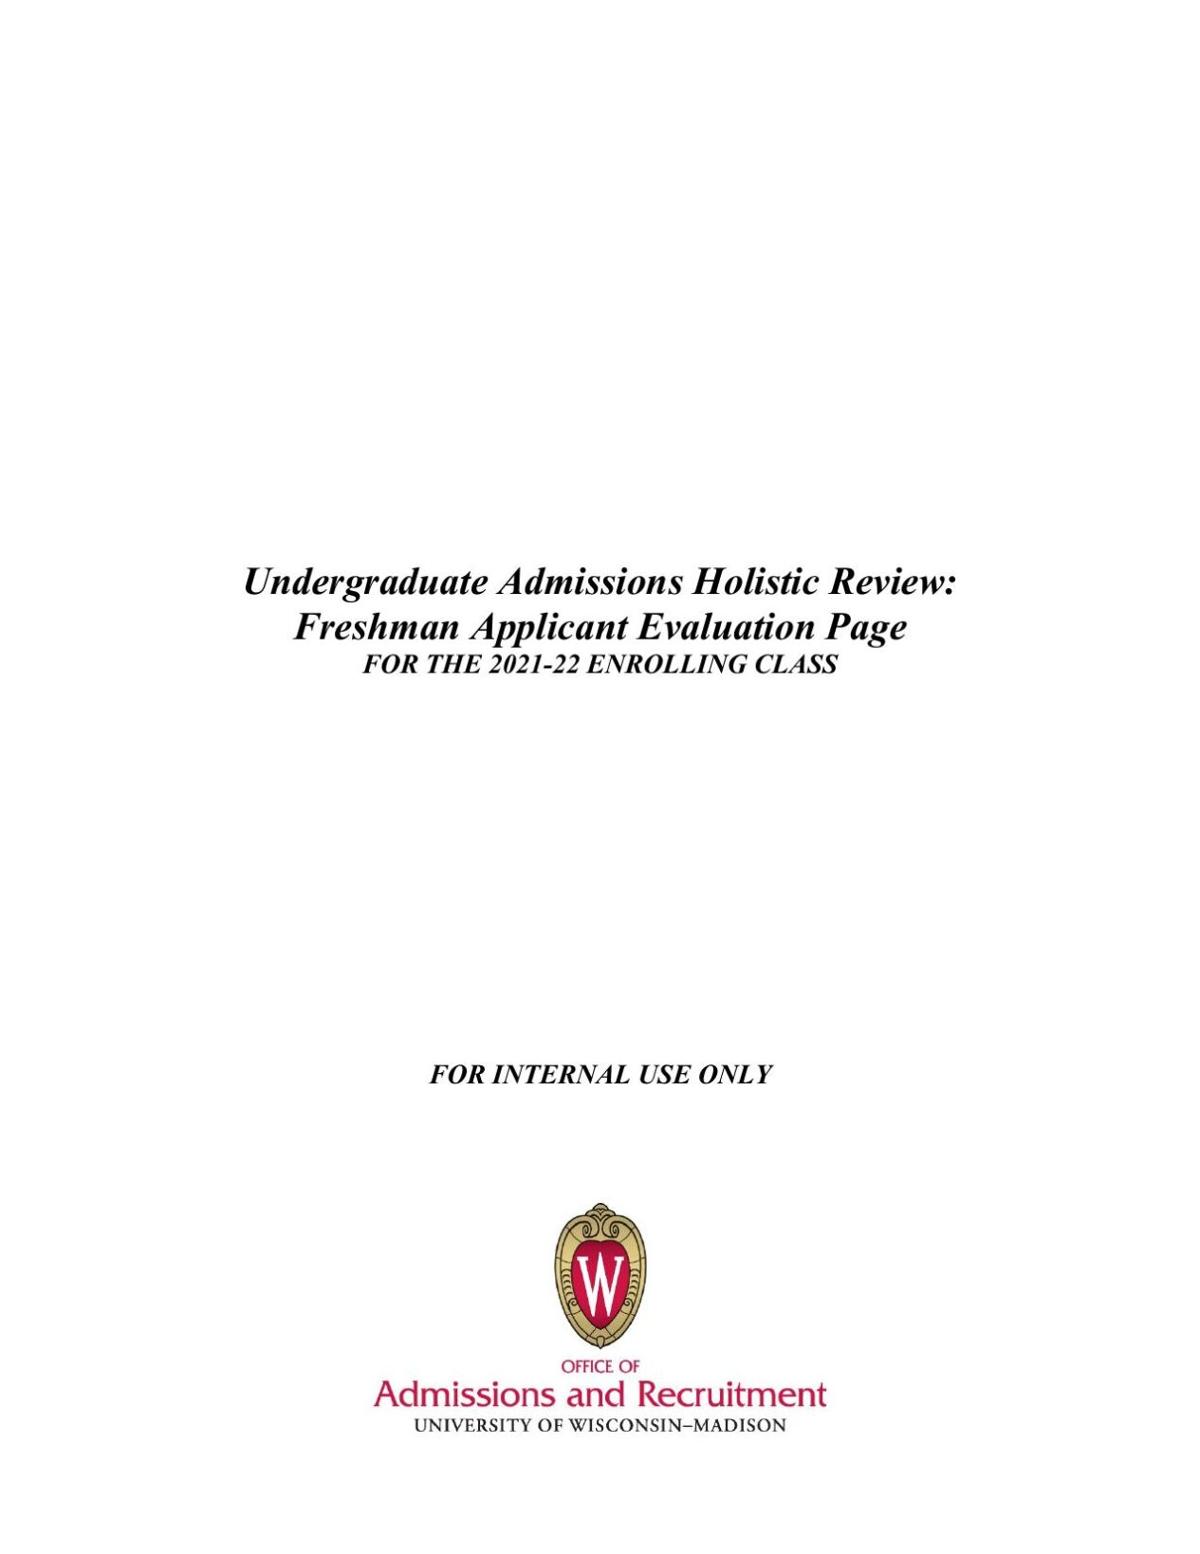 UW-Madison 2021-22 undergraduate admissions evaluation page